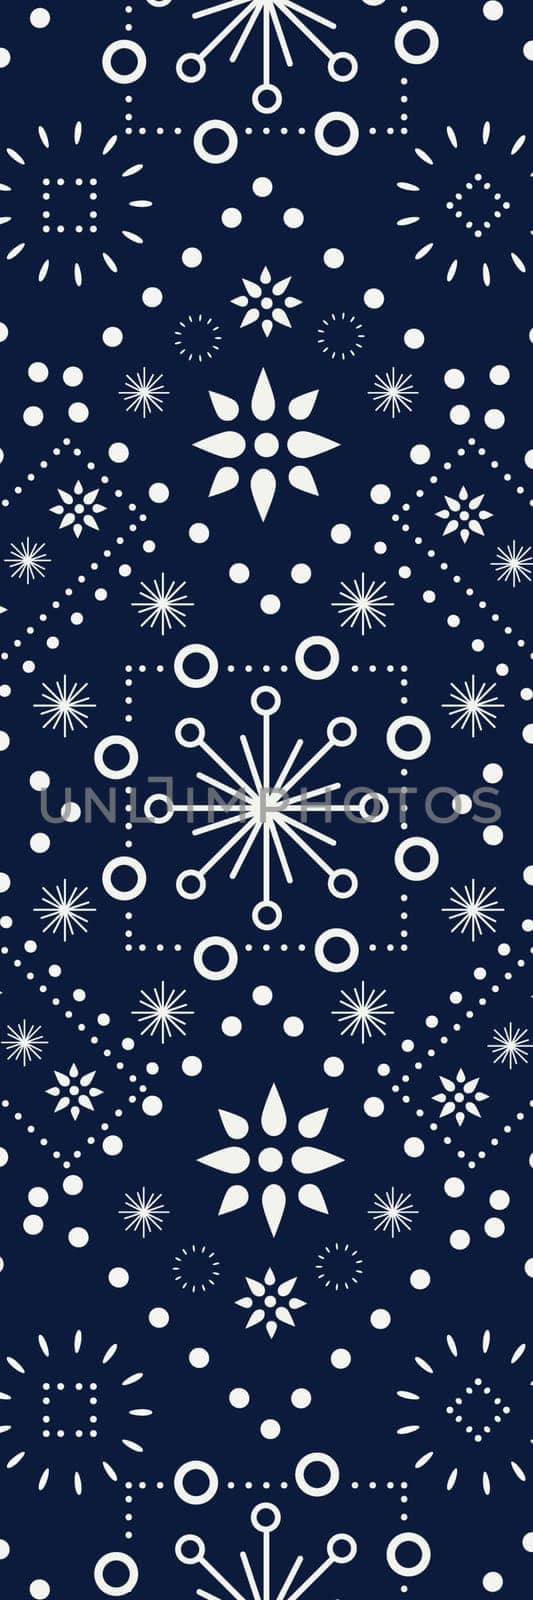 Blue Scandinavian Christmas pattern bookmark by Dustick